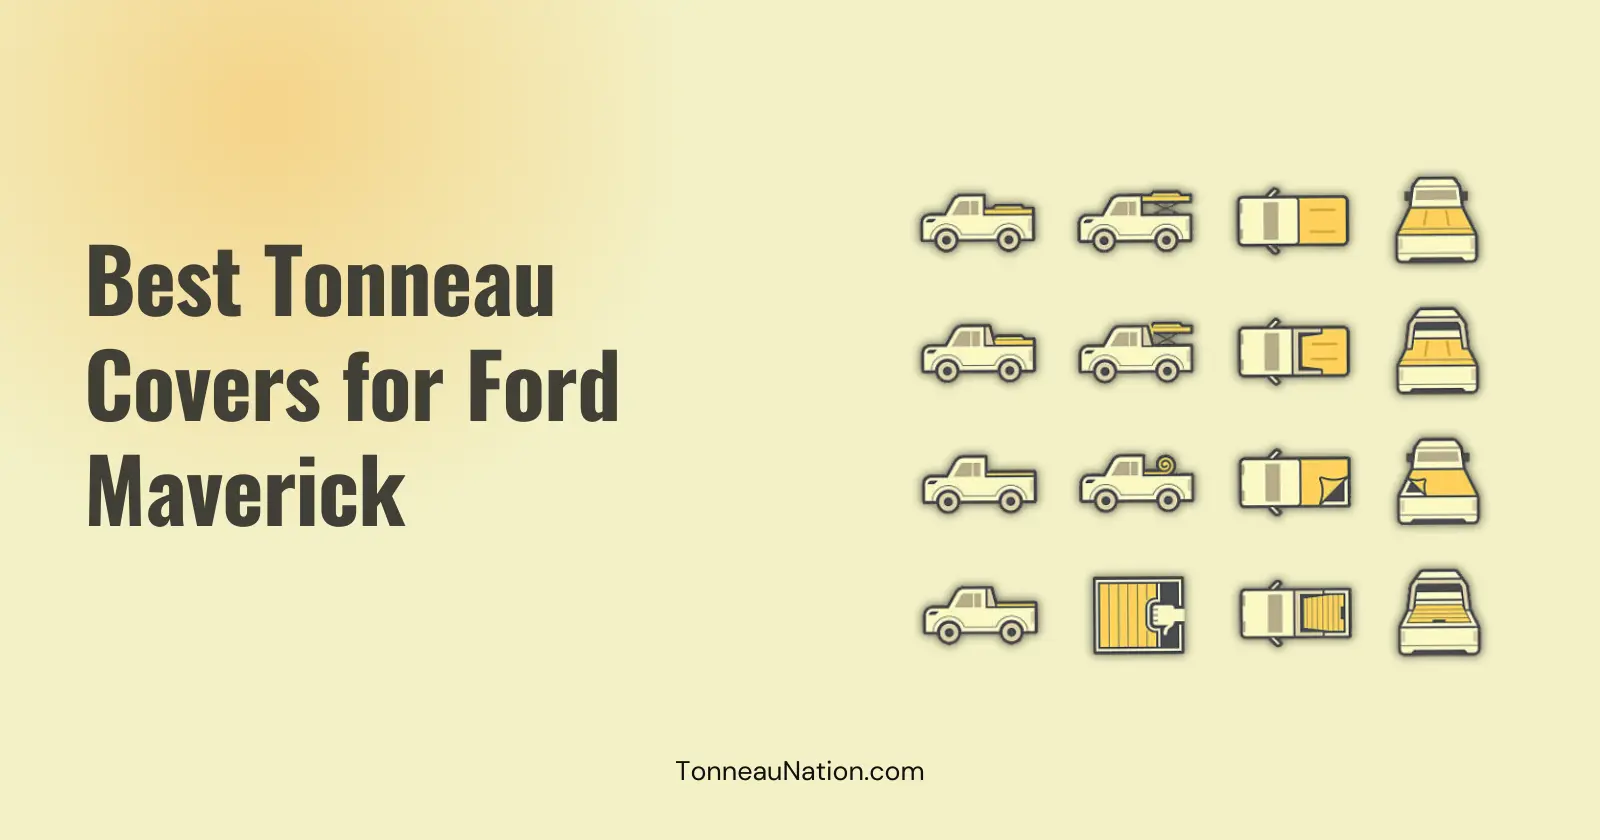 Tonneau cover for Ford Maverick